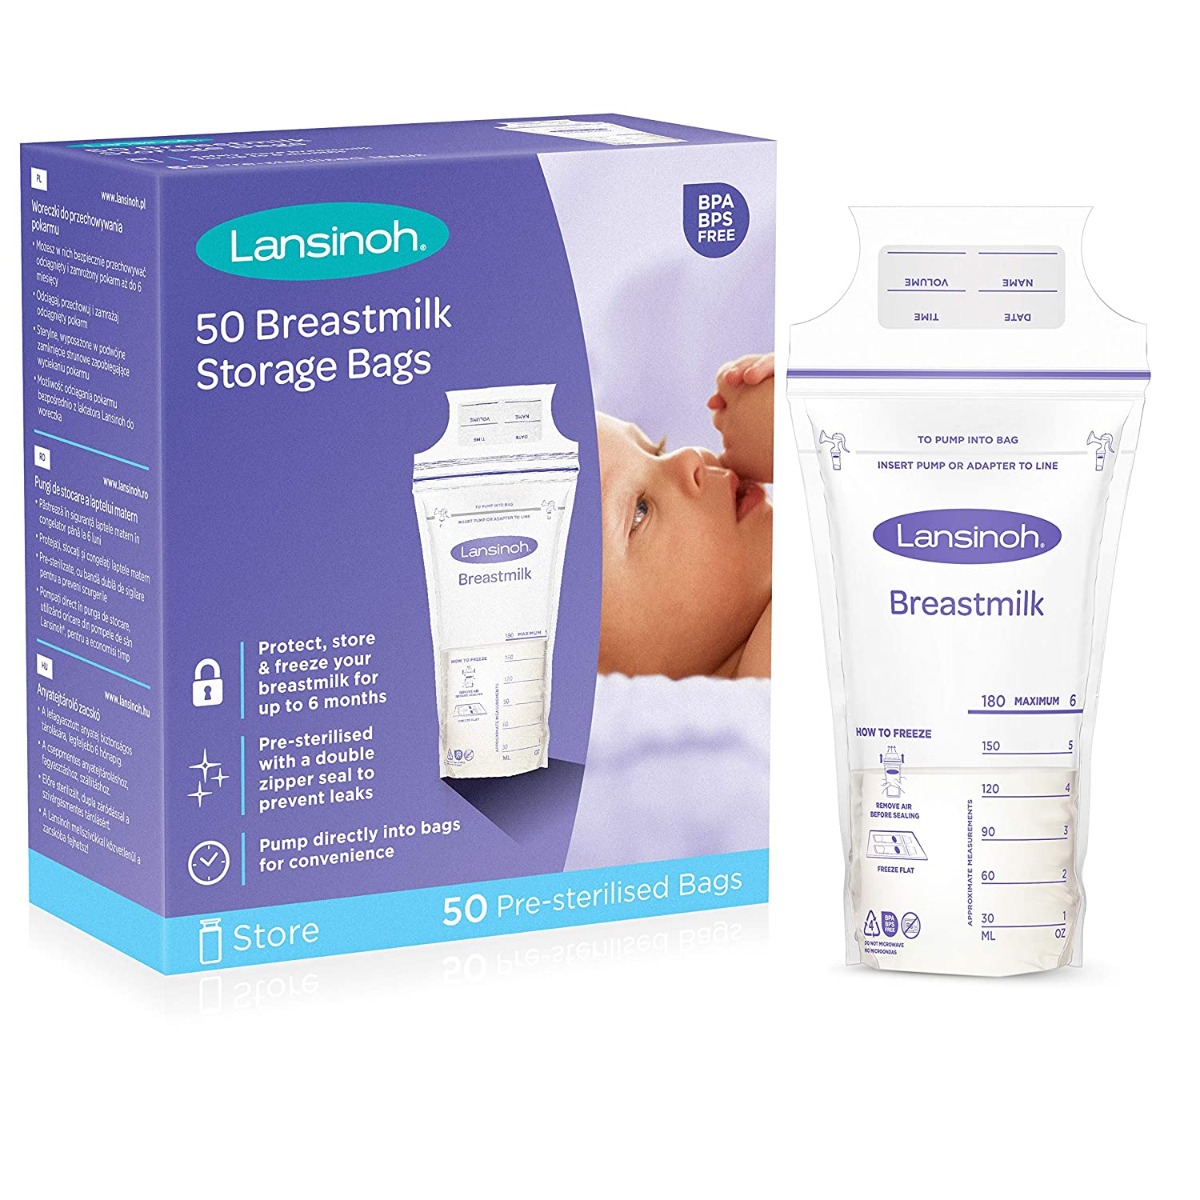 Lansinoh breast milk storage bags - 50pcs